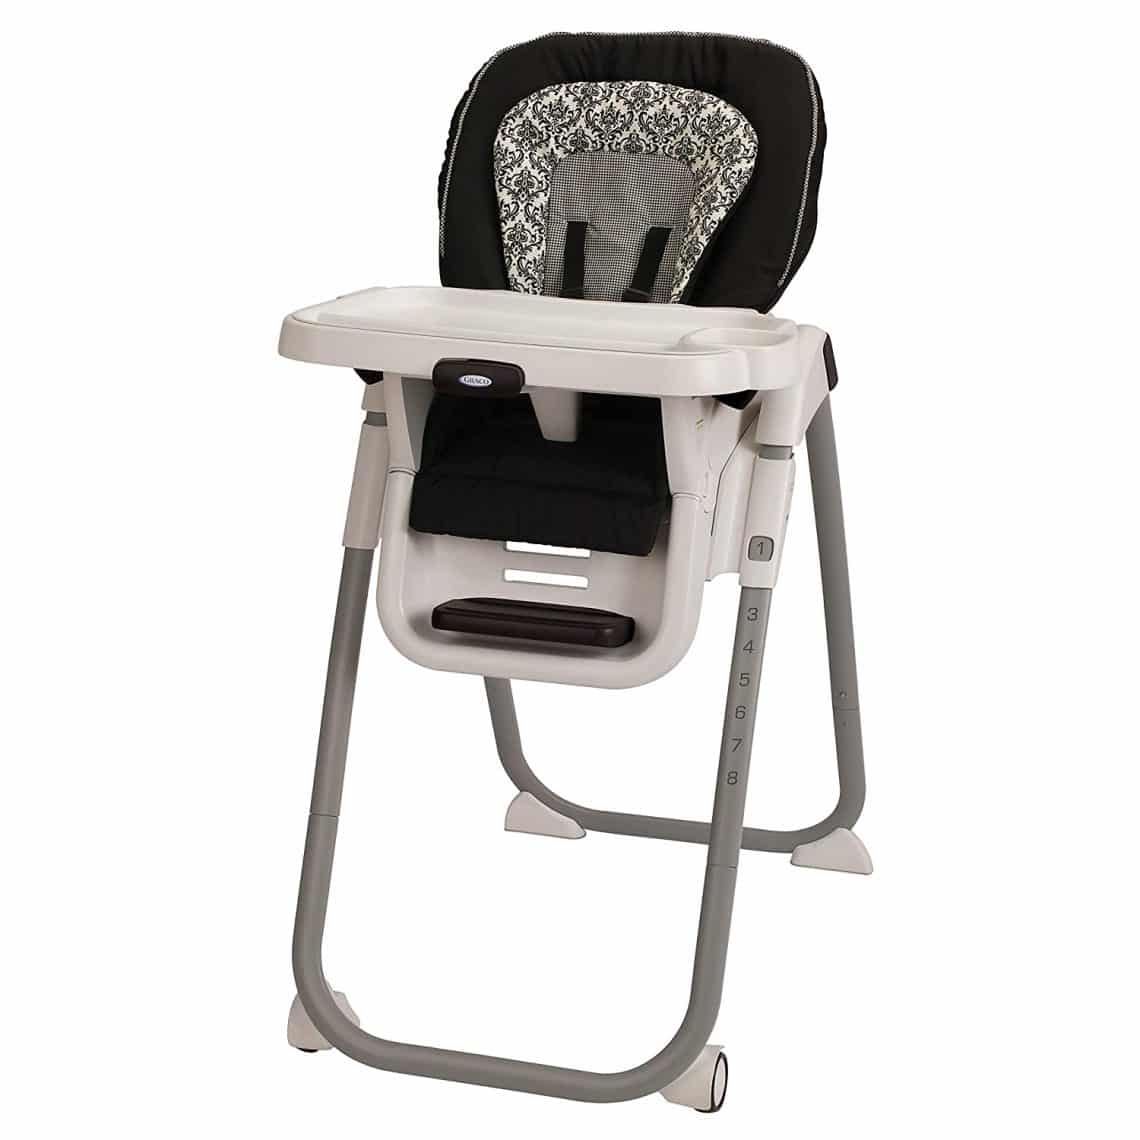 8. Graco TableFit High Chair 1140x1140 